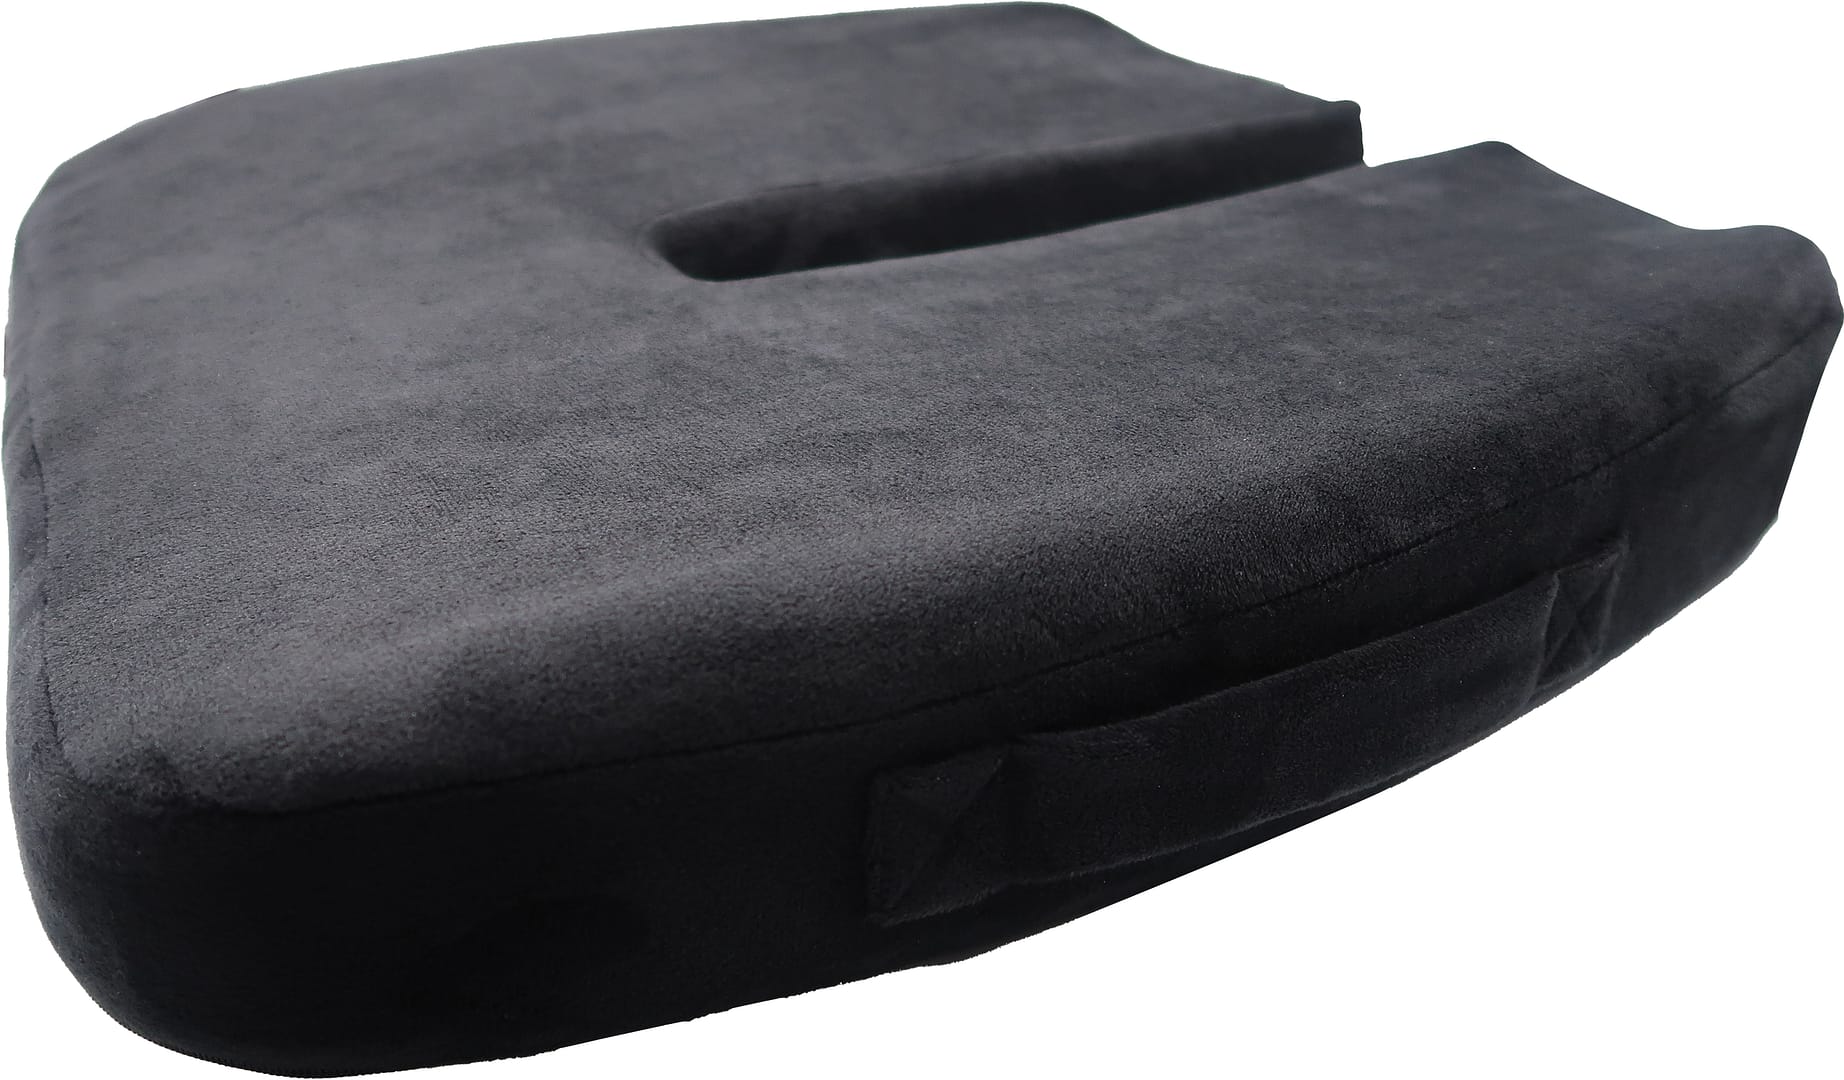 Afunbaby Memory Foam Seat Cushion Tailbone Pressure Relief